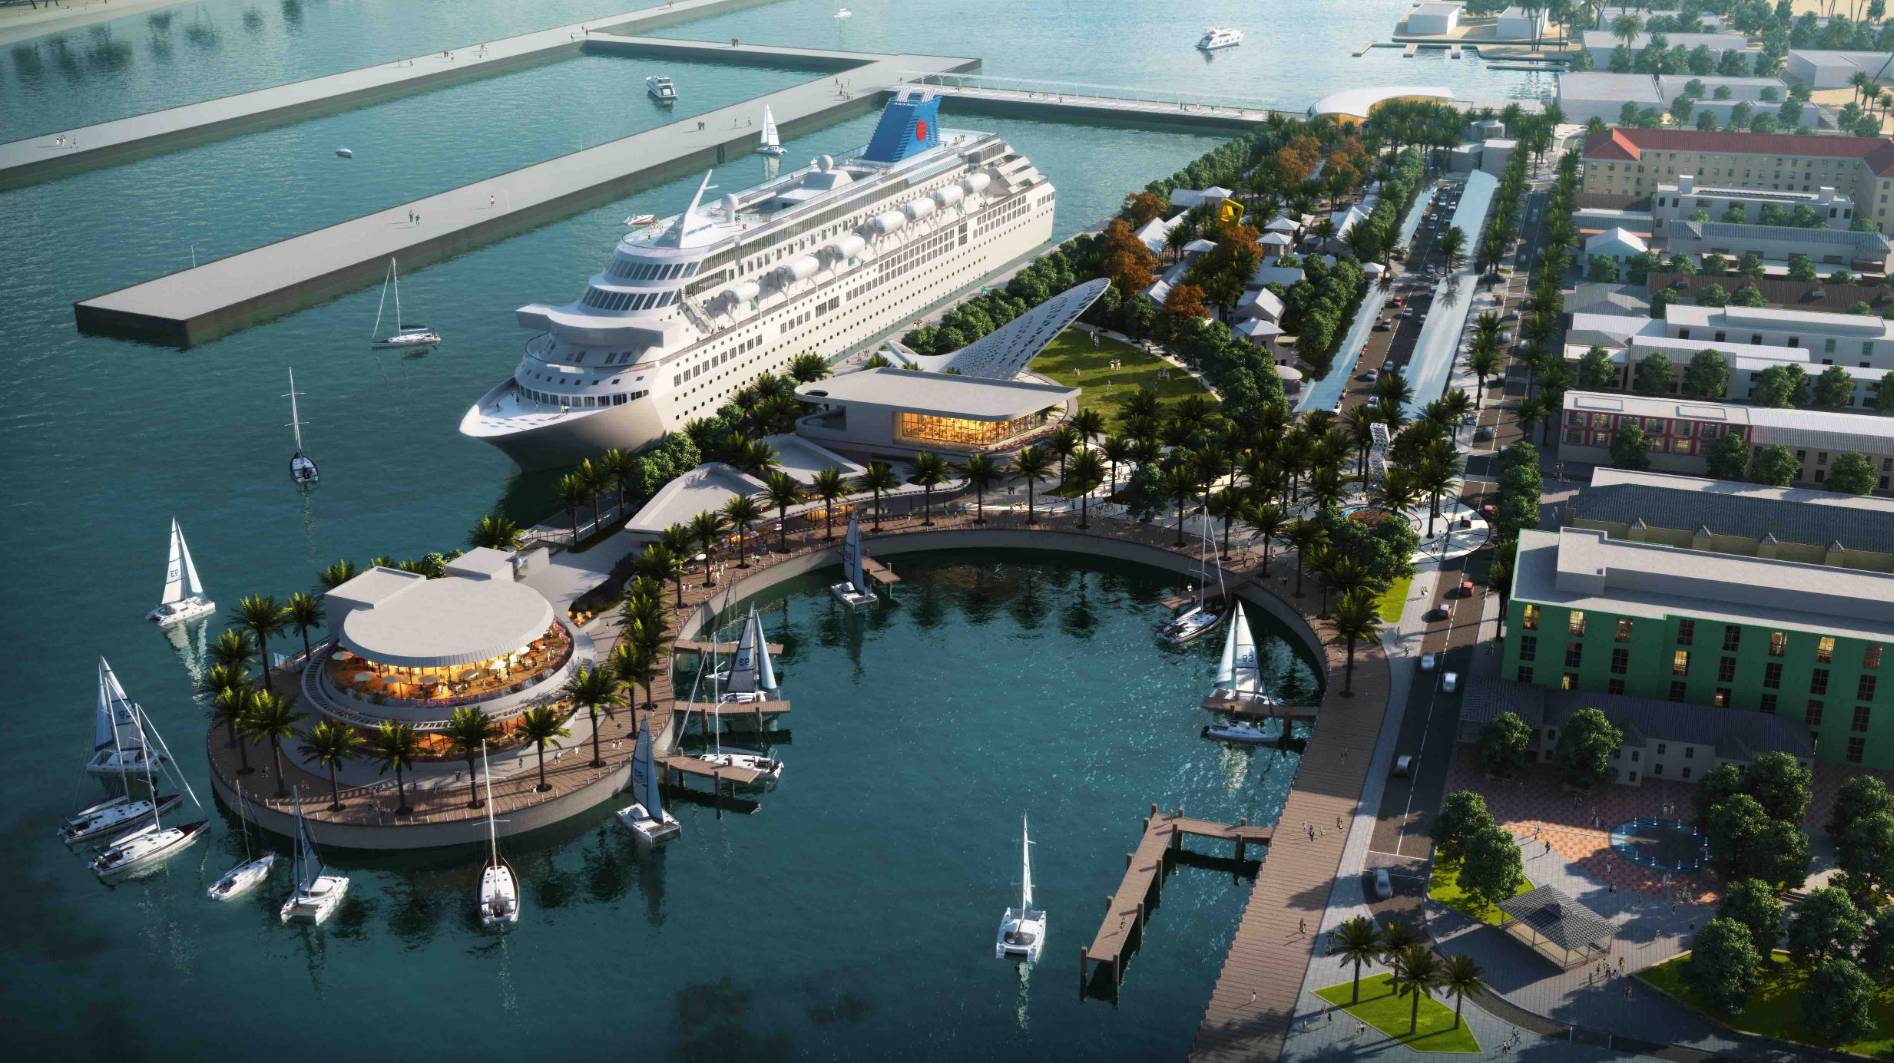 Nassau Cruise Port project gets funding